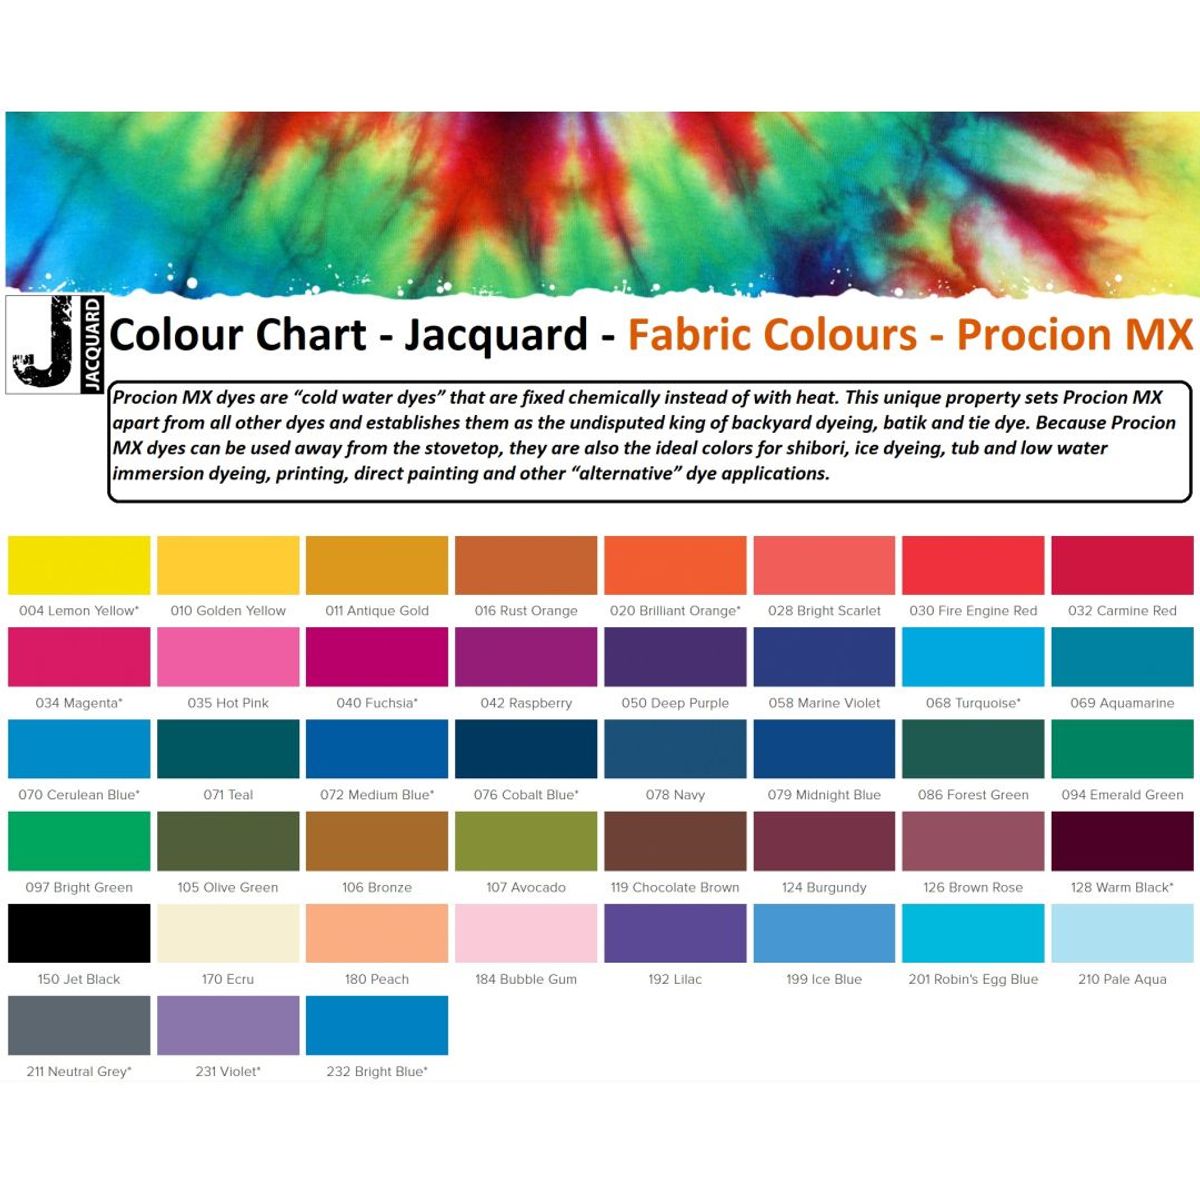 Jacquard - Procion MX Dye - Fabric Textile - Navy 078